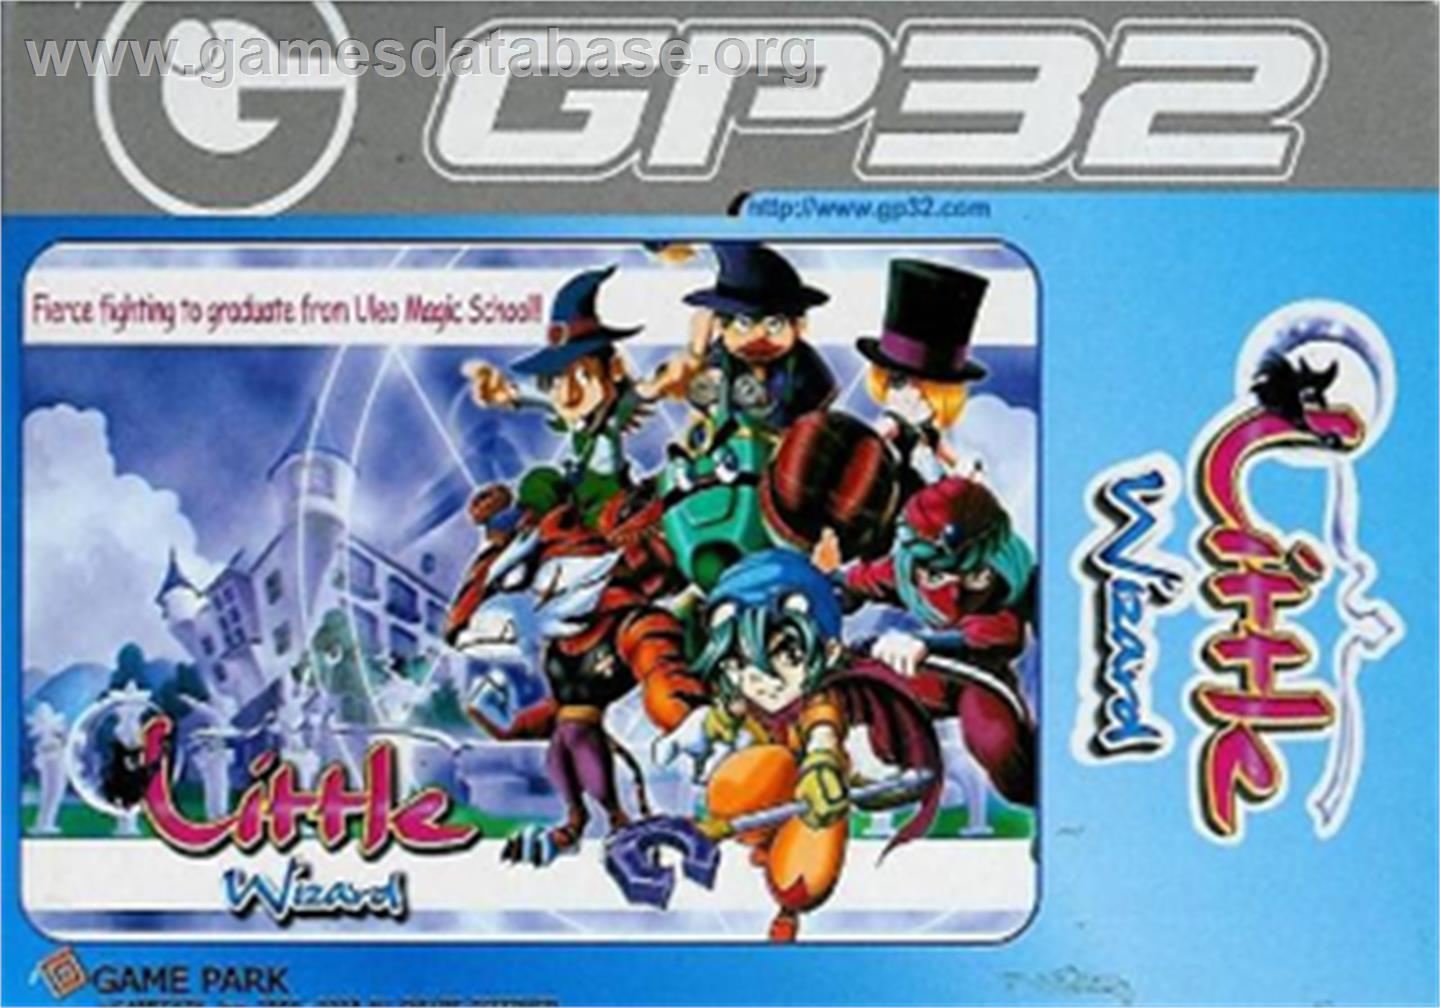 Little Wizard - Gamepark GP32 - Artwork - Box